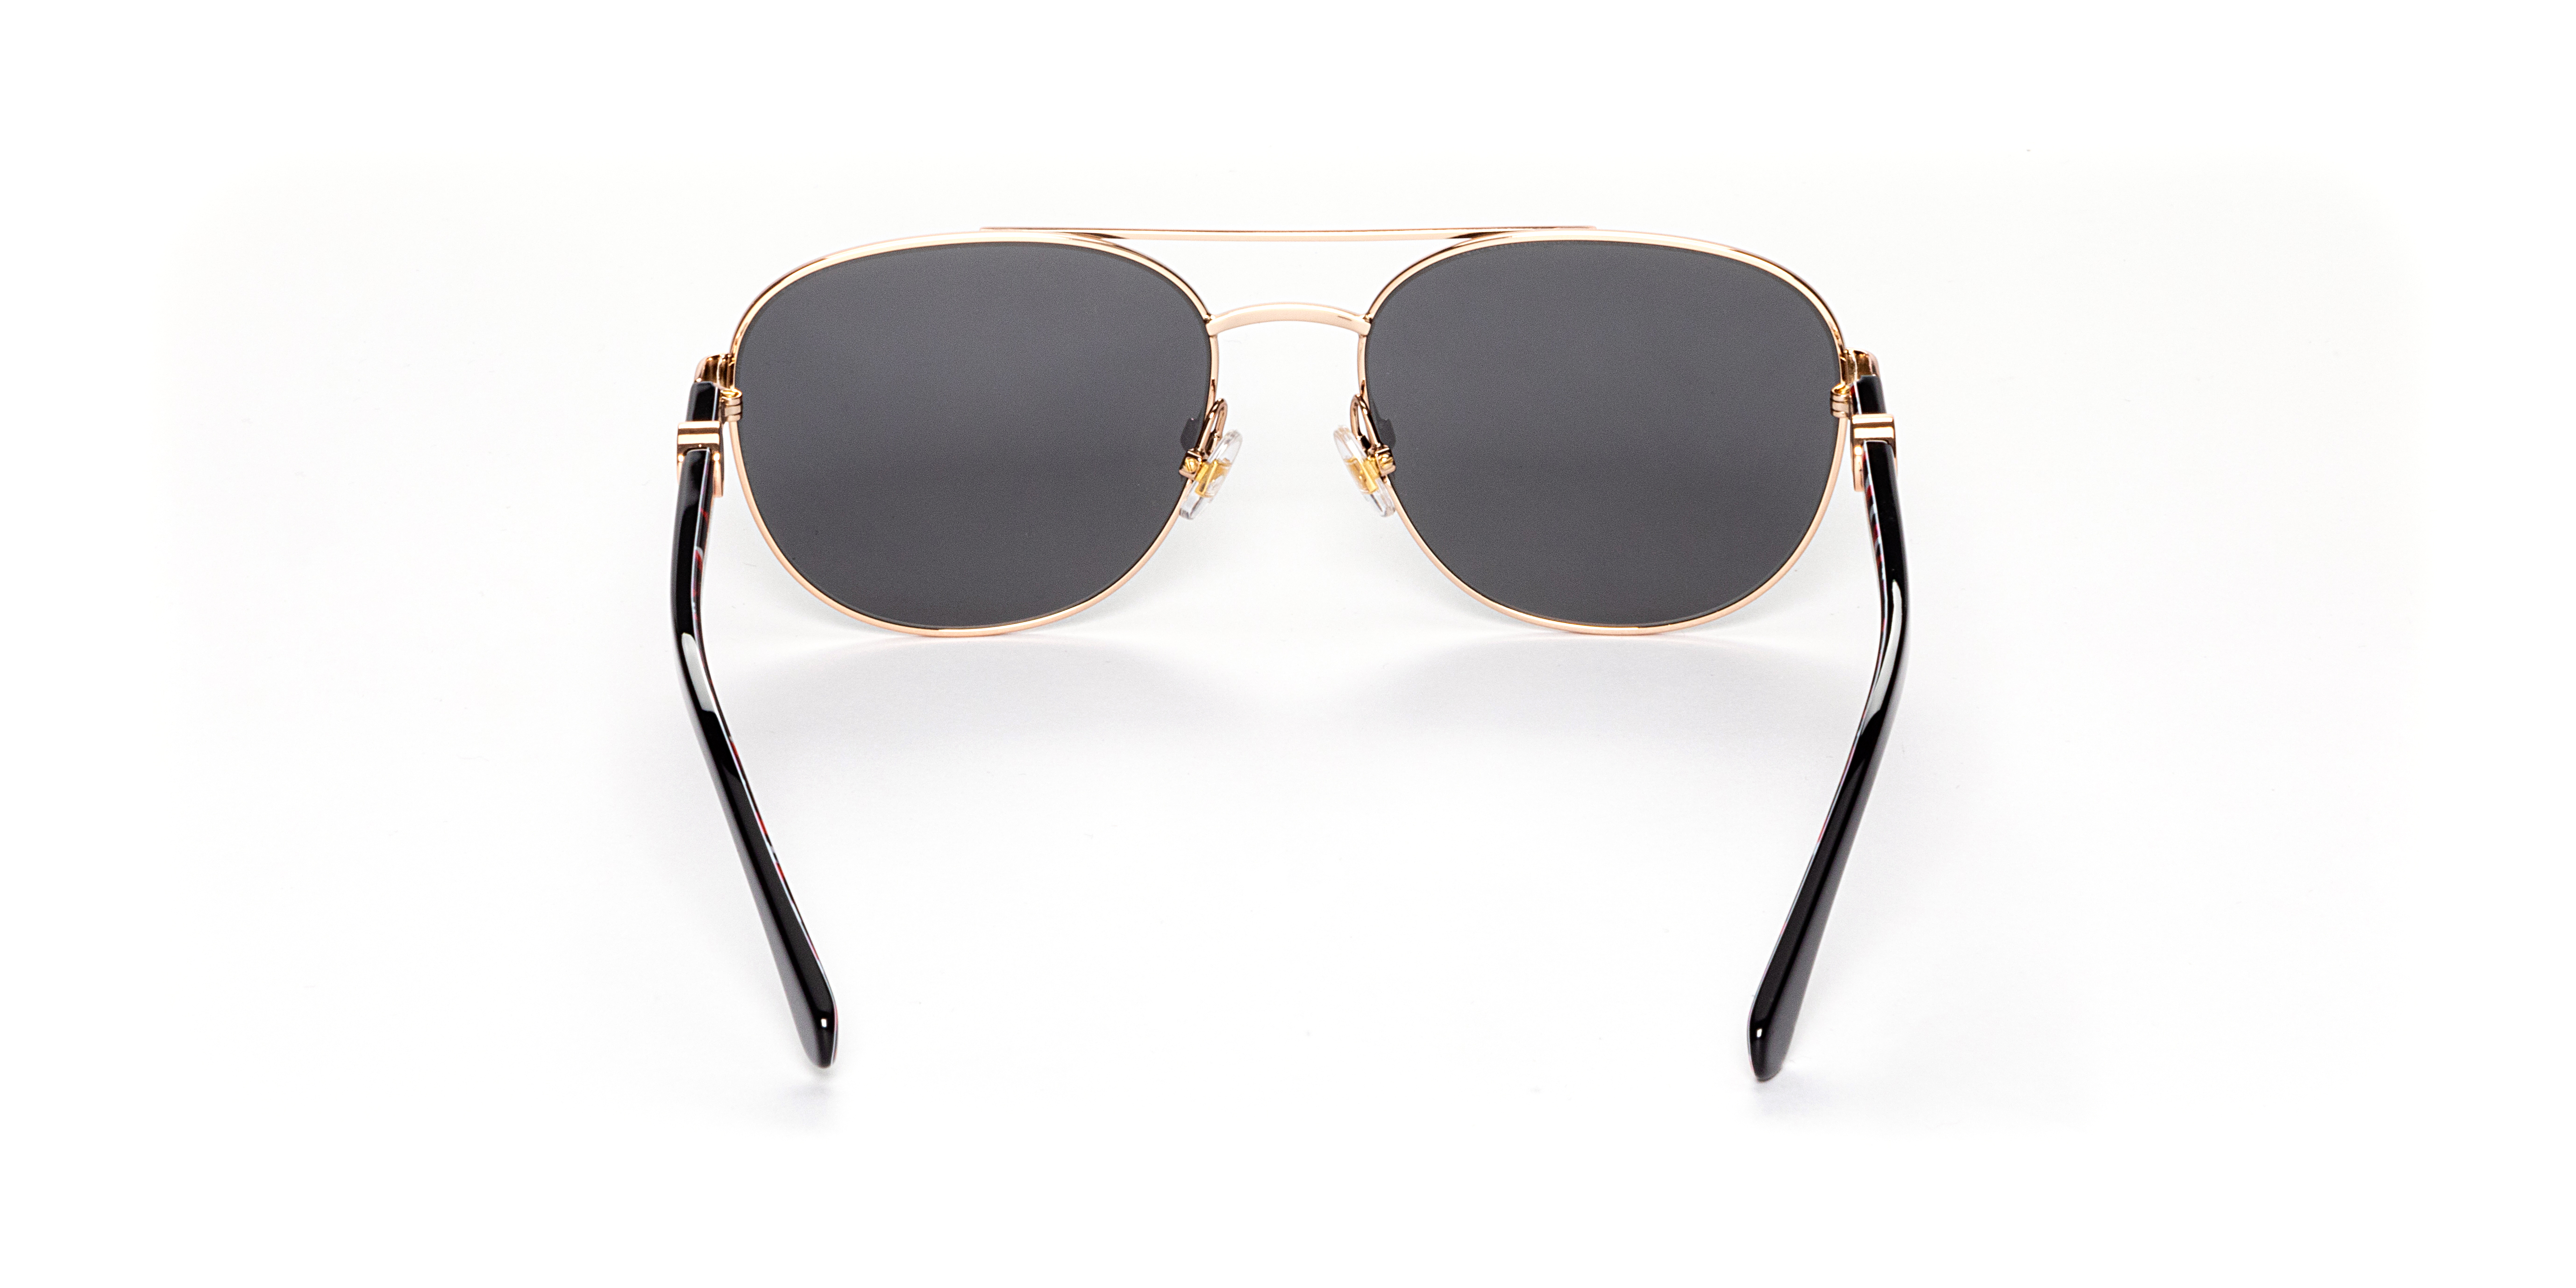 Draper James DJ7002 - Best Price and Available as Prescription Sunglasses